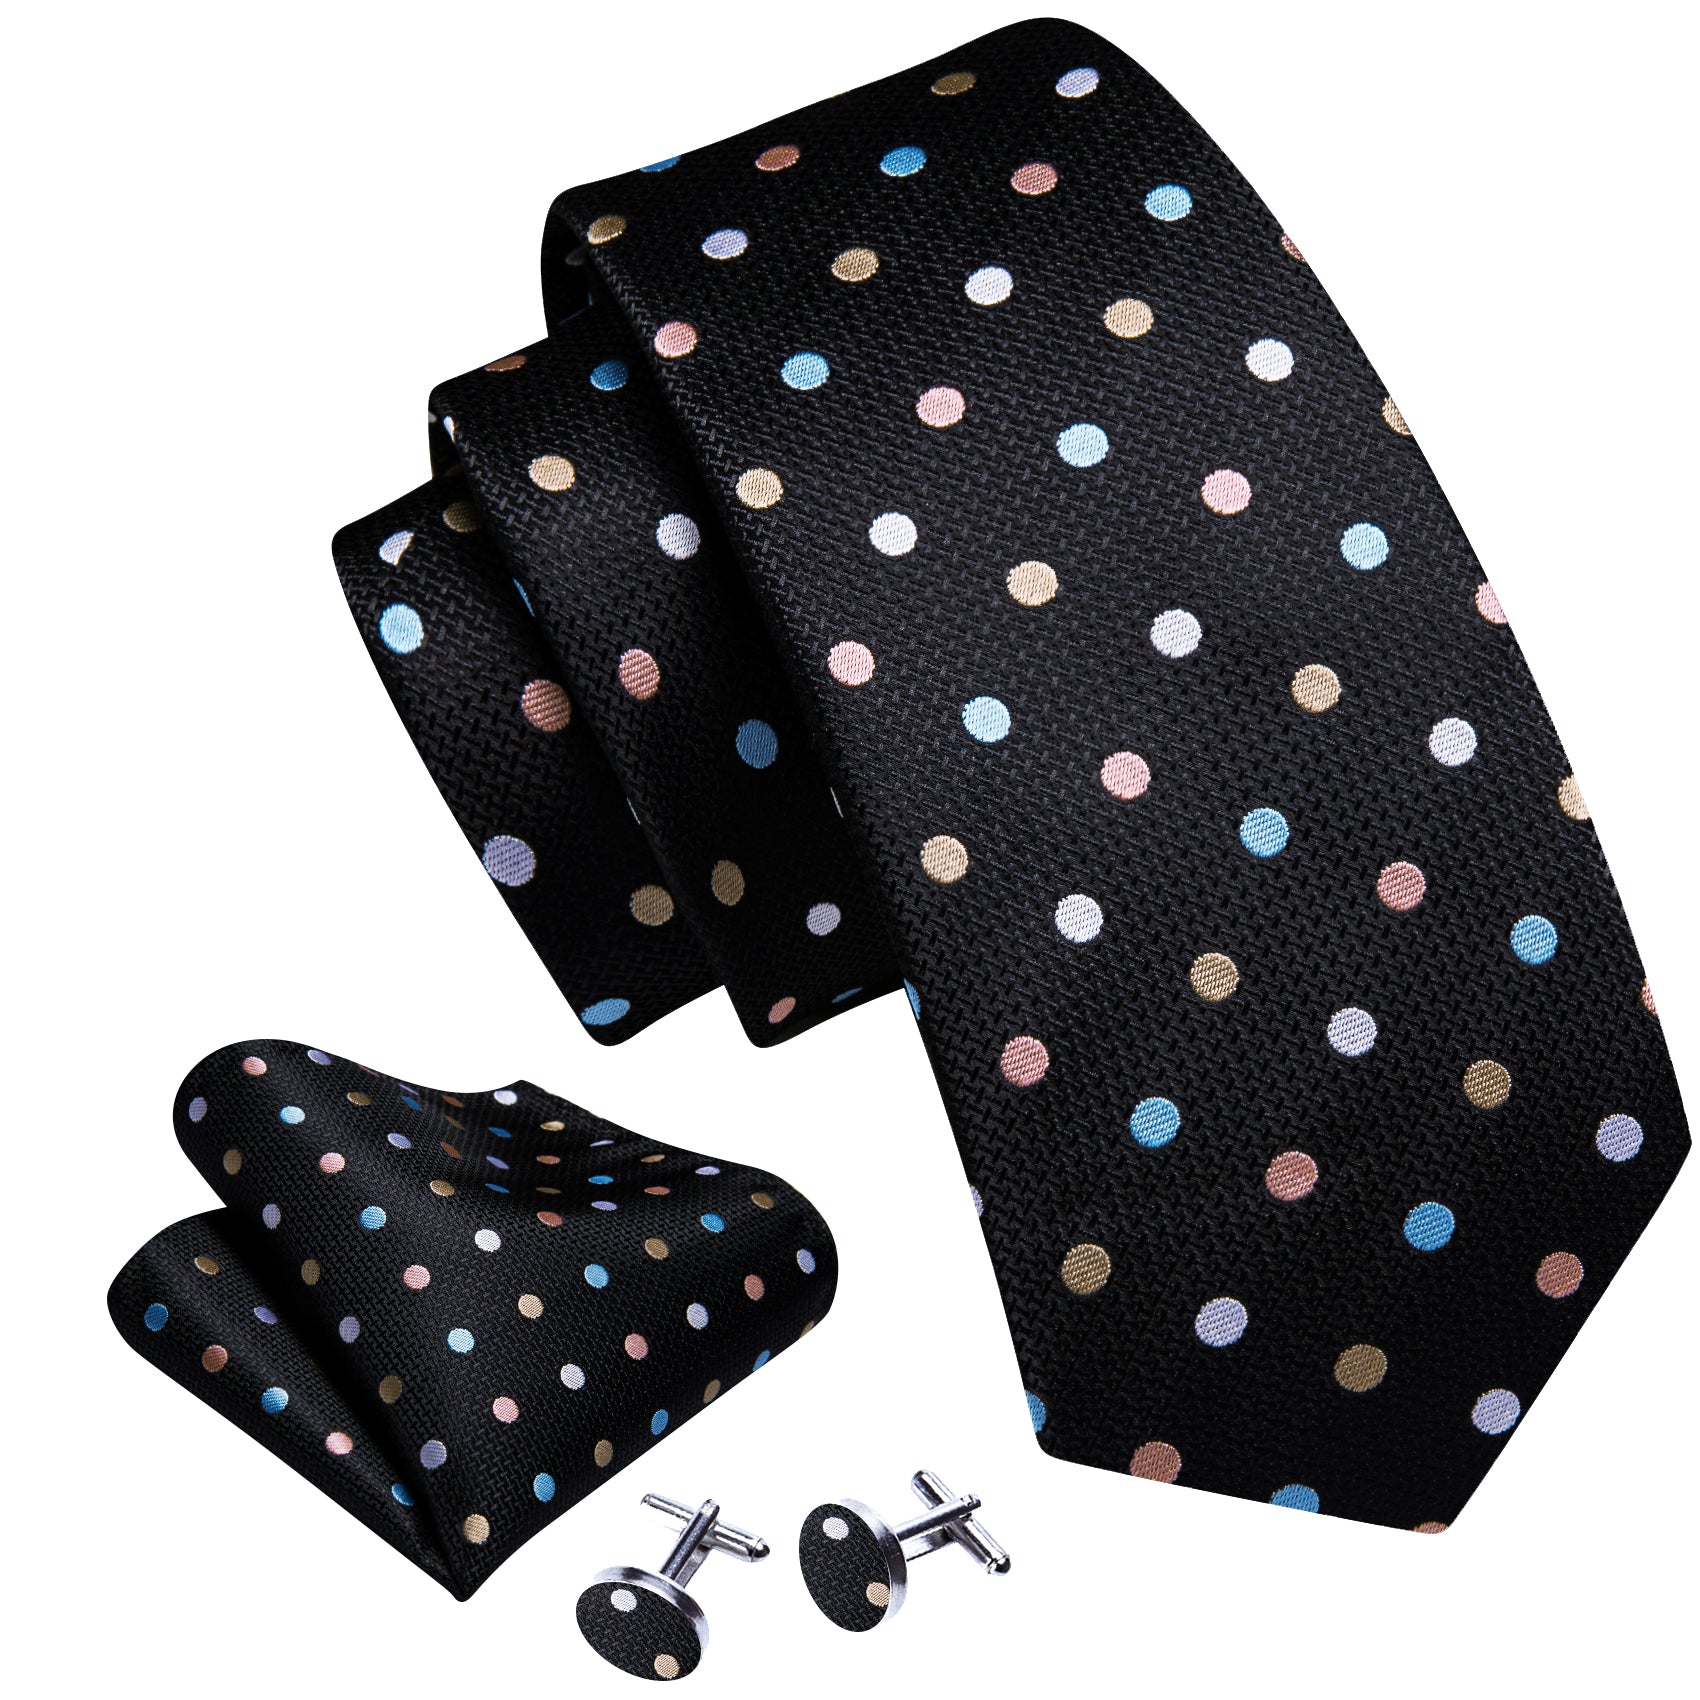 Black tie for men wedding cute polka dots 